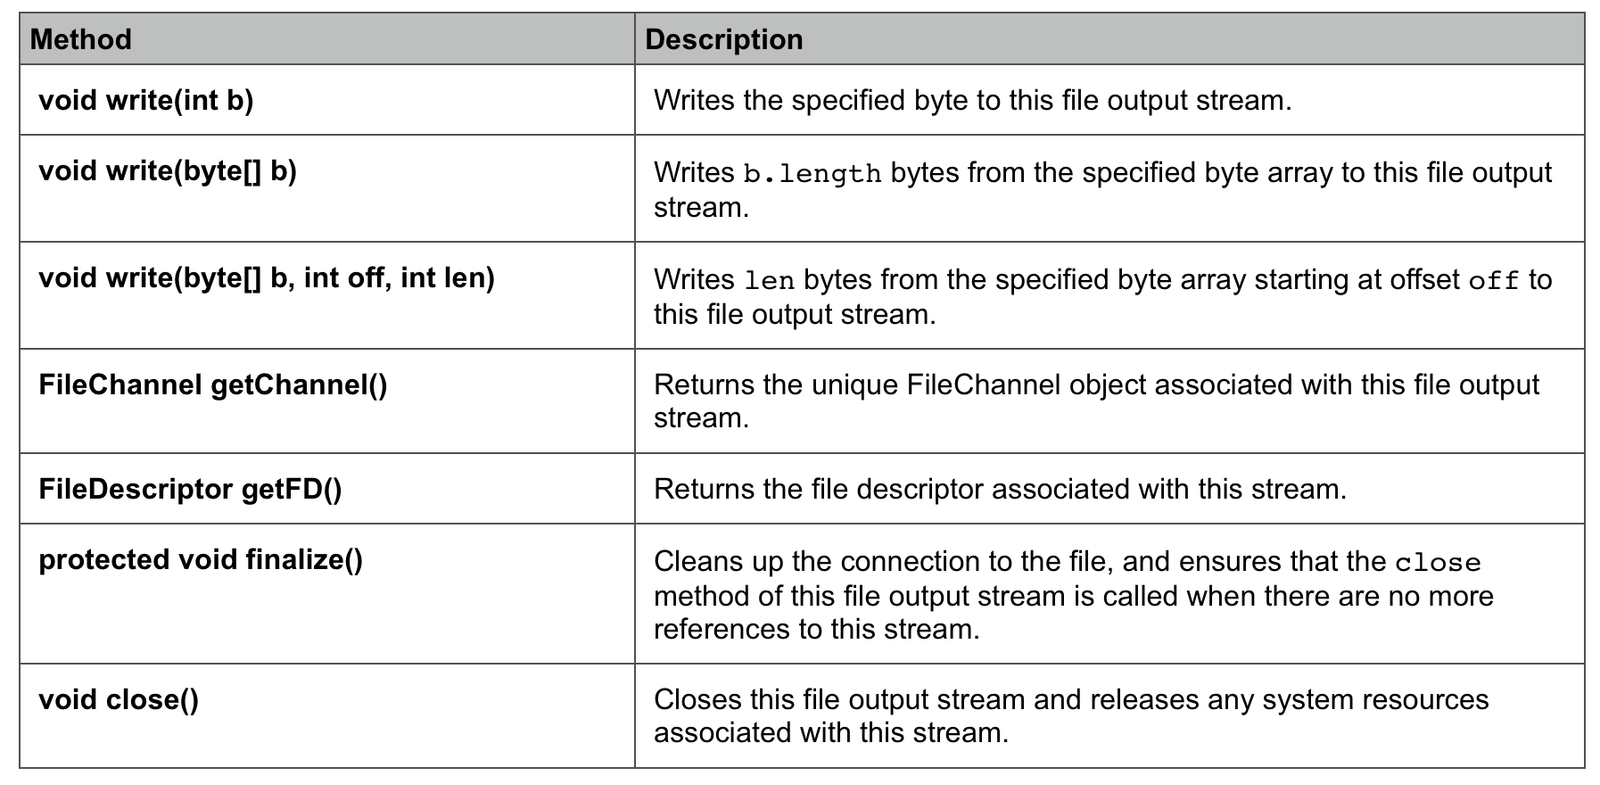 FileOutputStream in Java